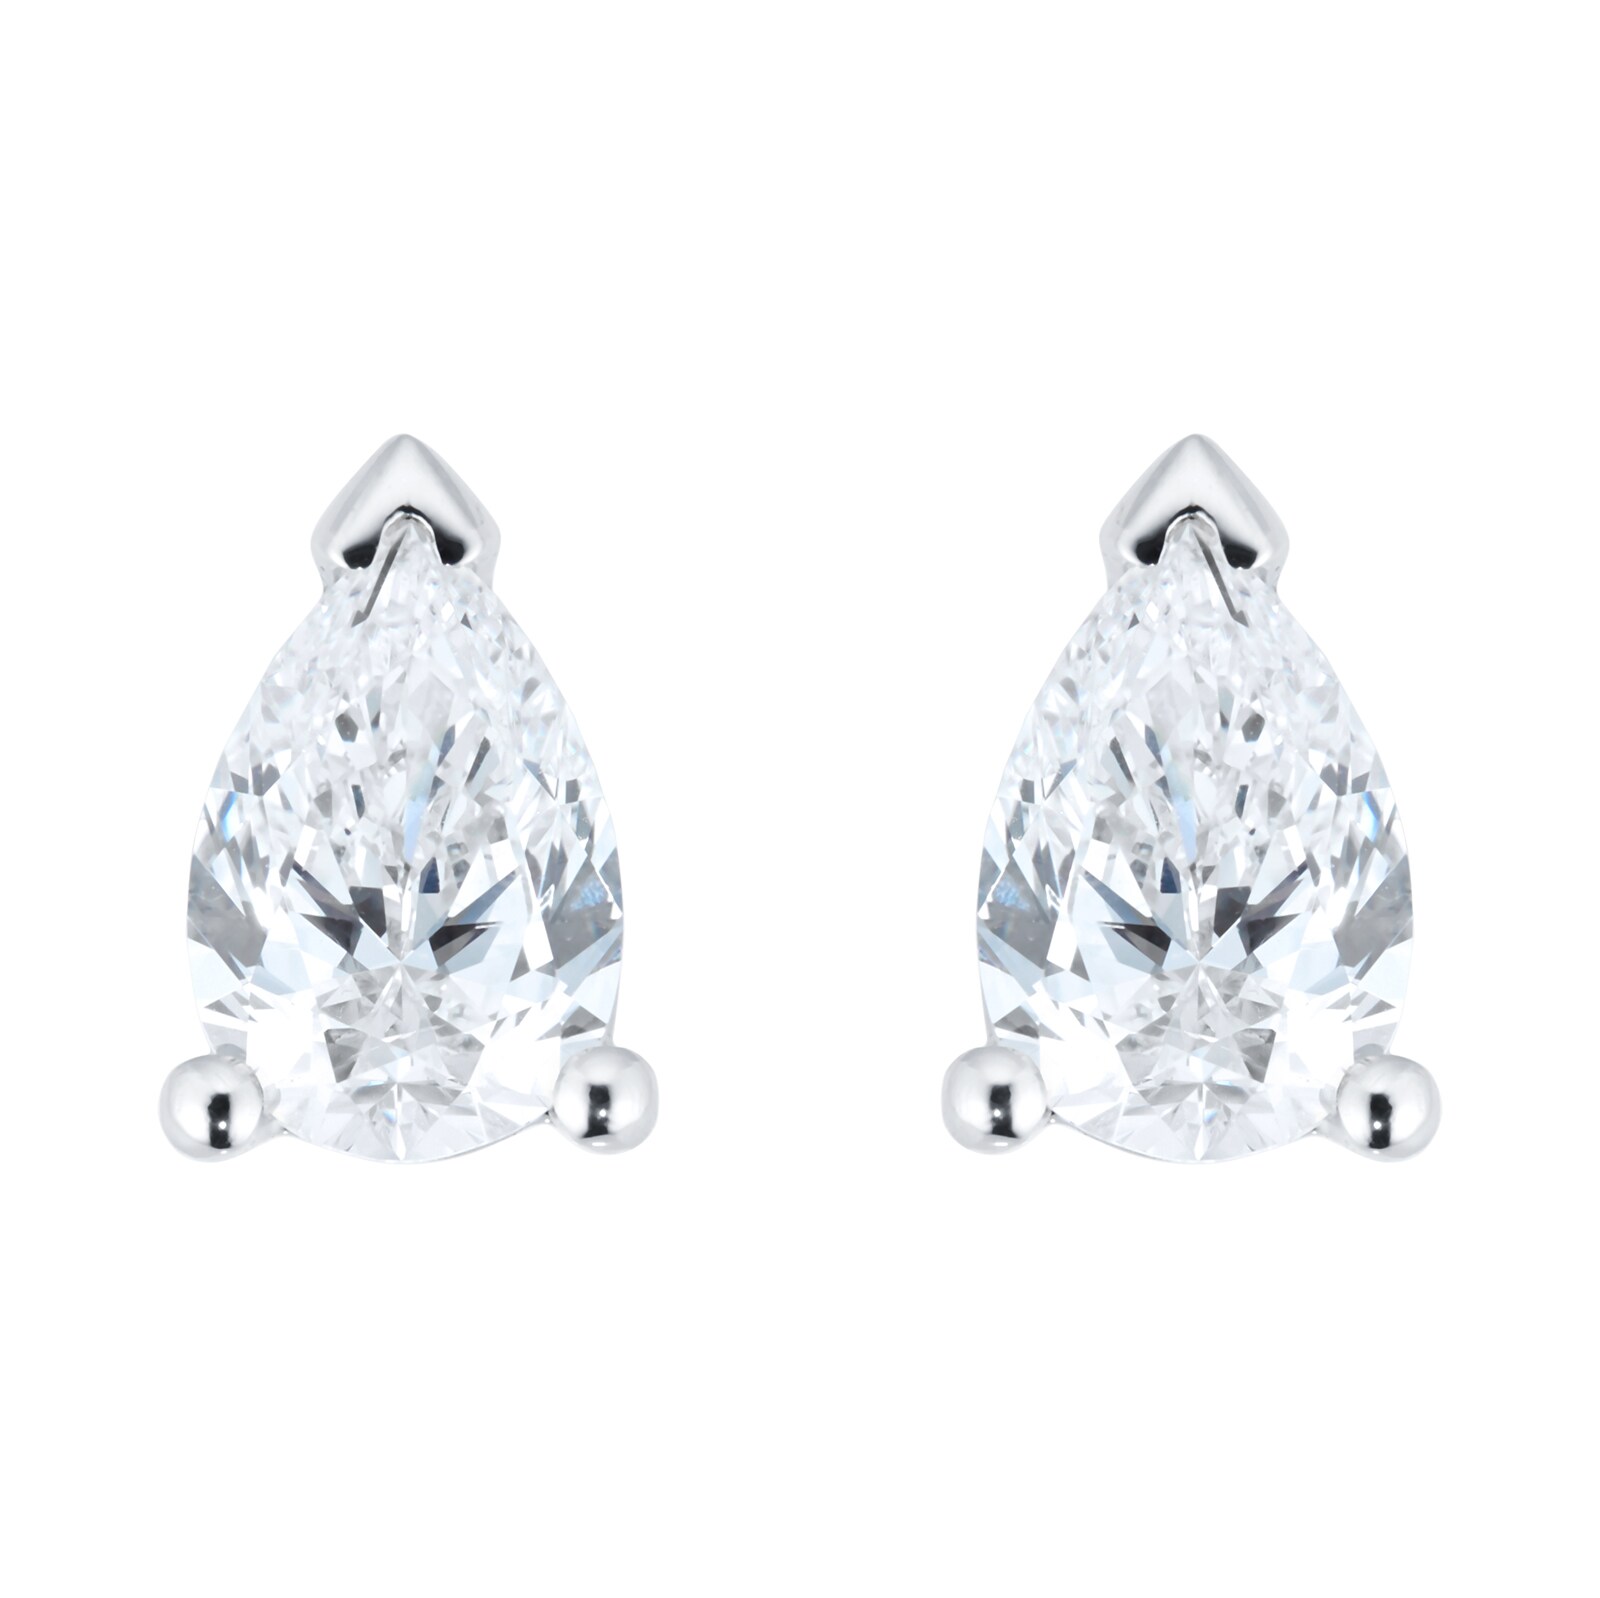 Platinum 2.00cttw Pear Cut Diamond Stud Earrings